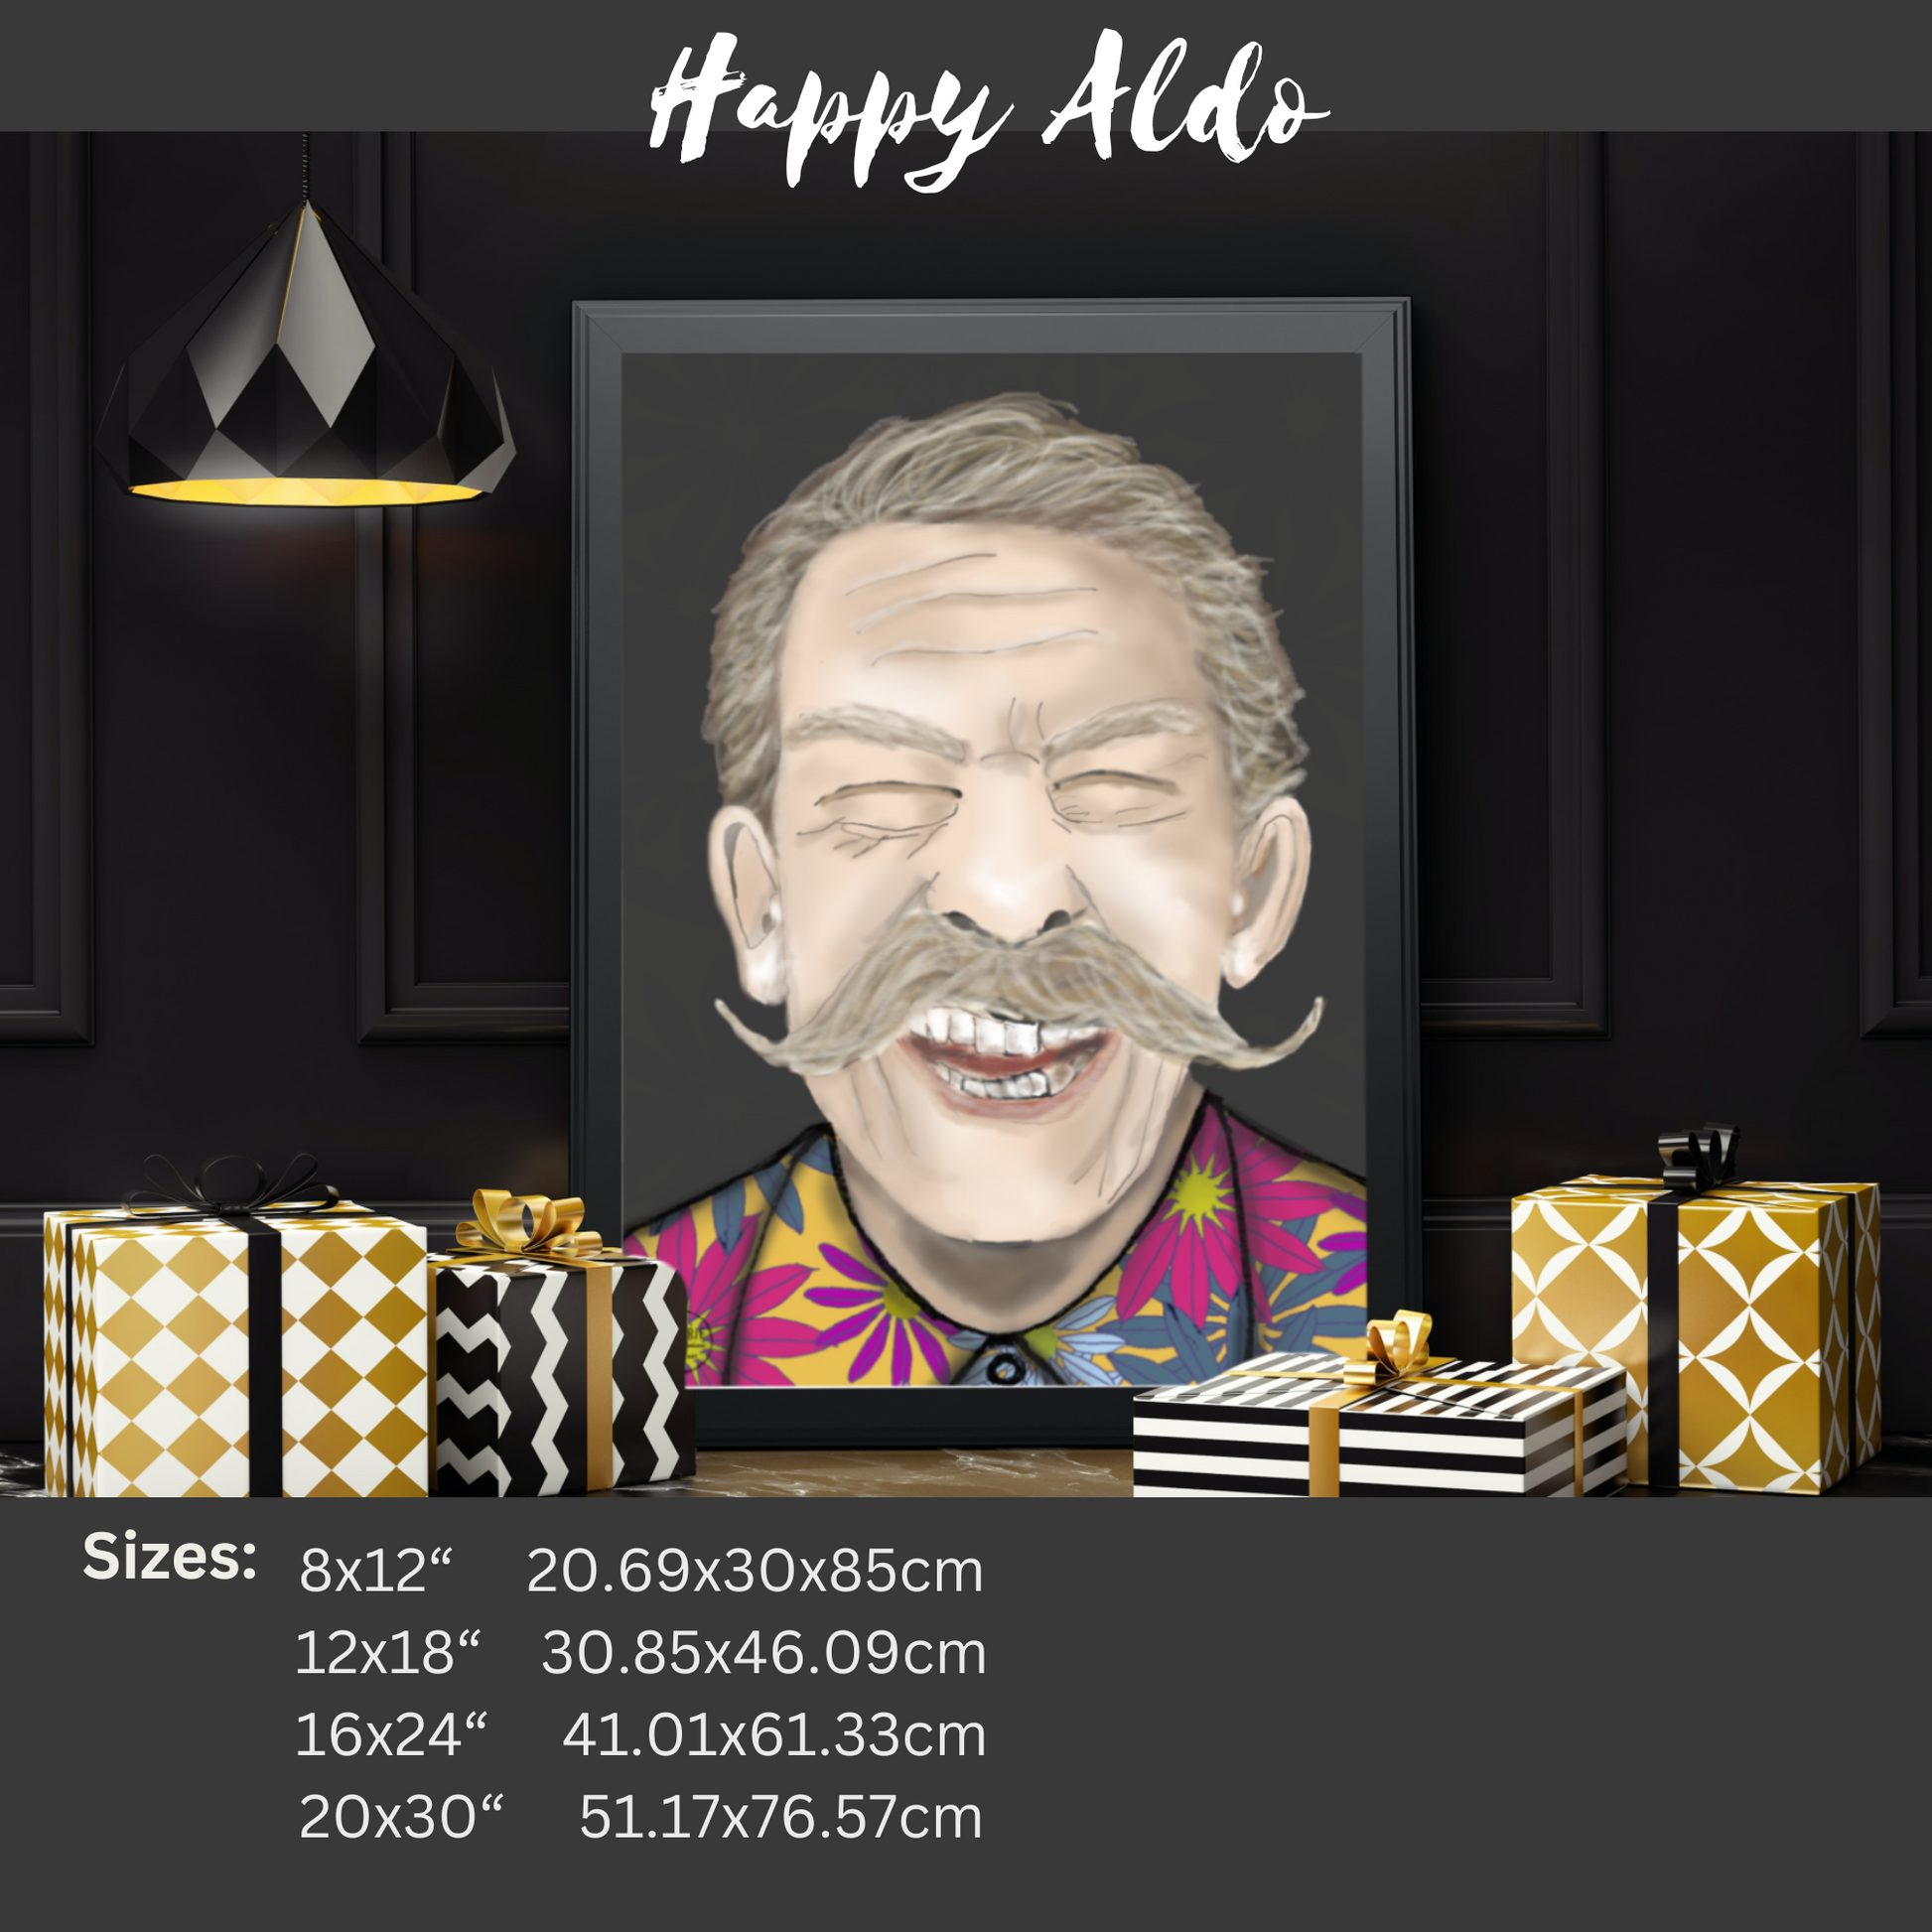 HAPPY ALDO - Canvas print - valerie-digital-art